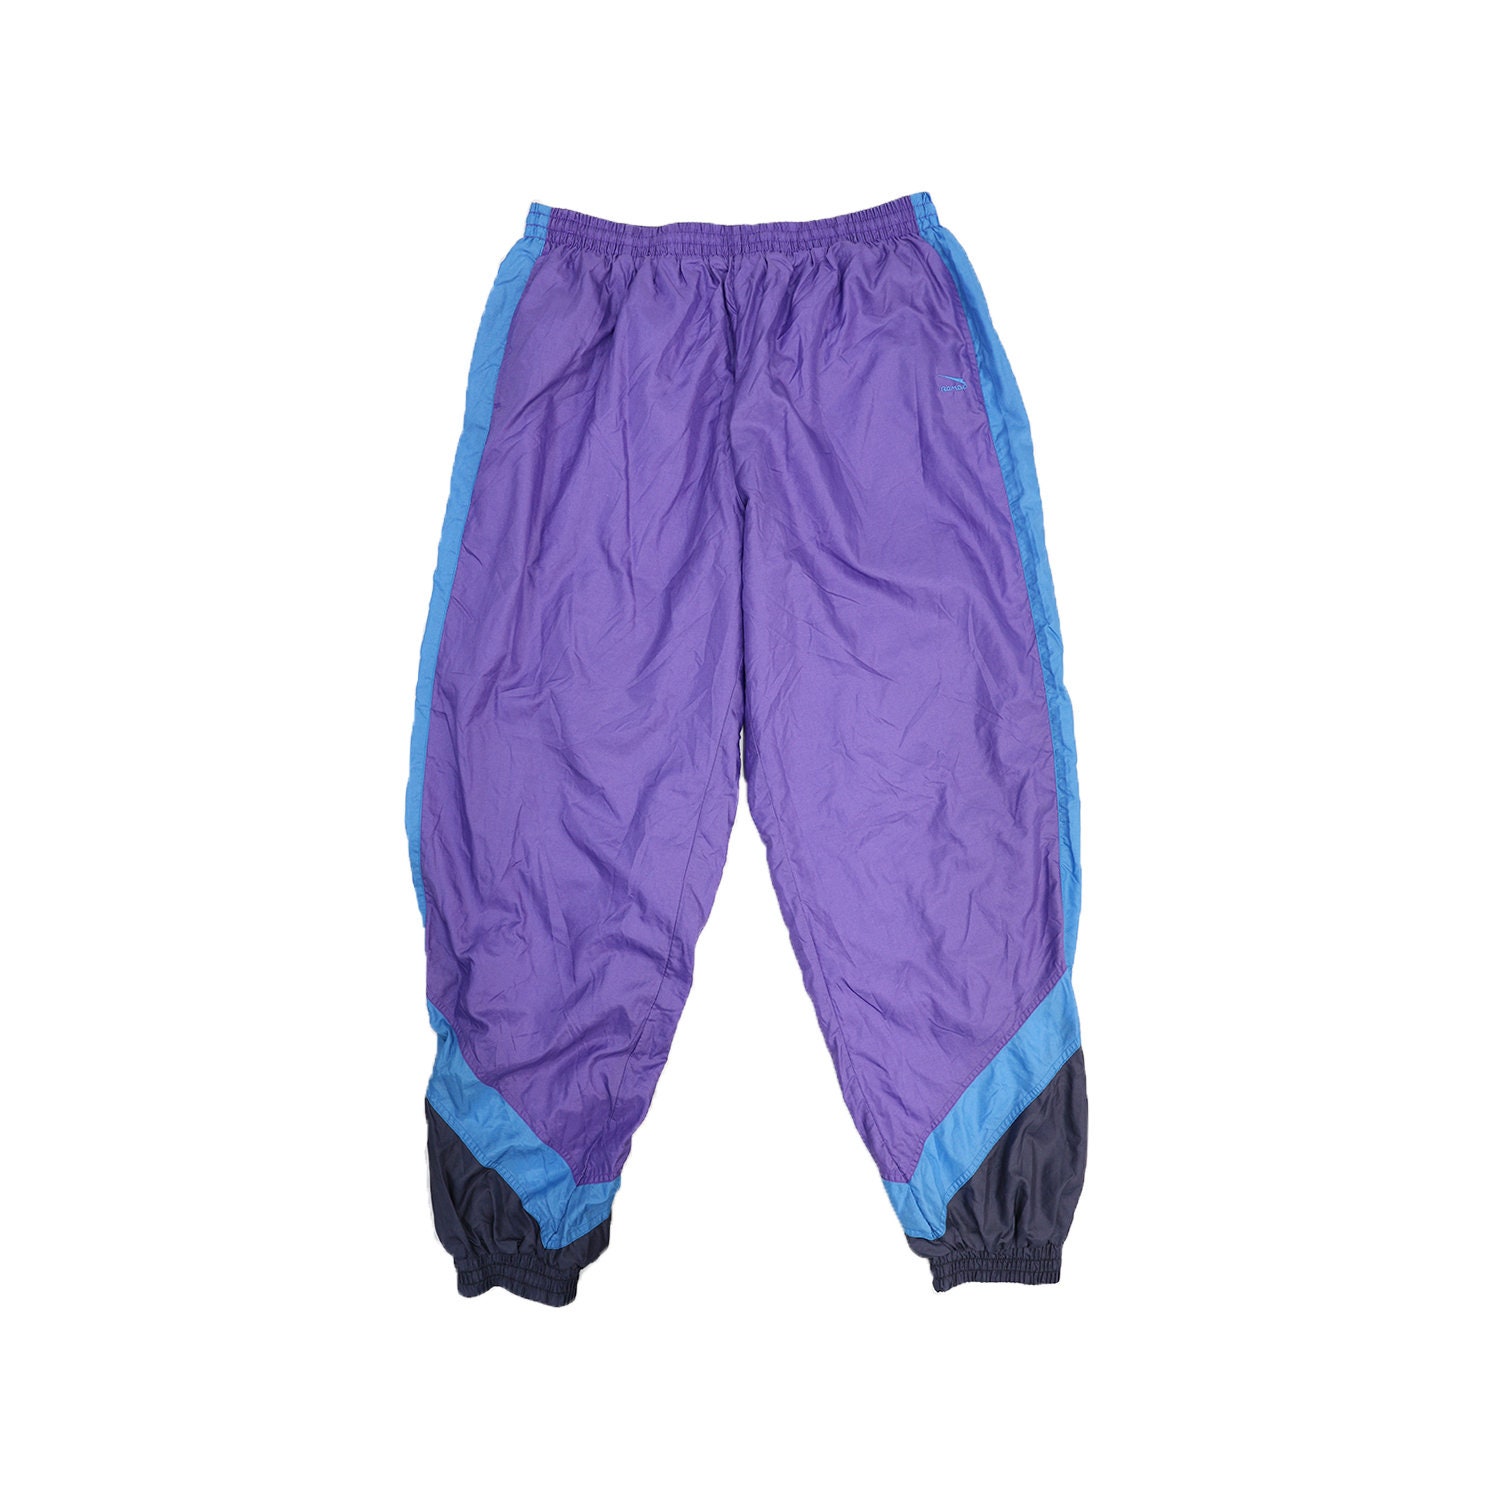 Vintage 90s purple Reebok track pants! Such a nice... - Depop